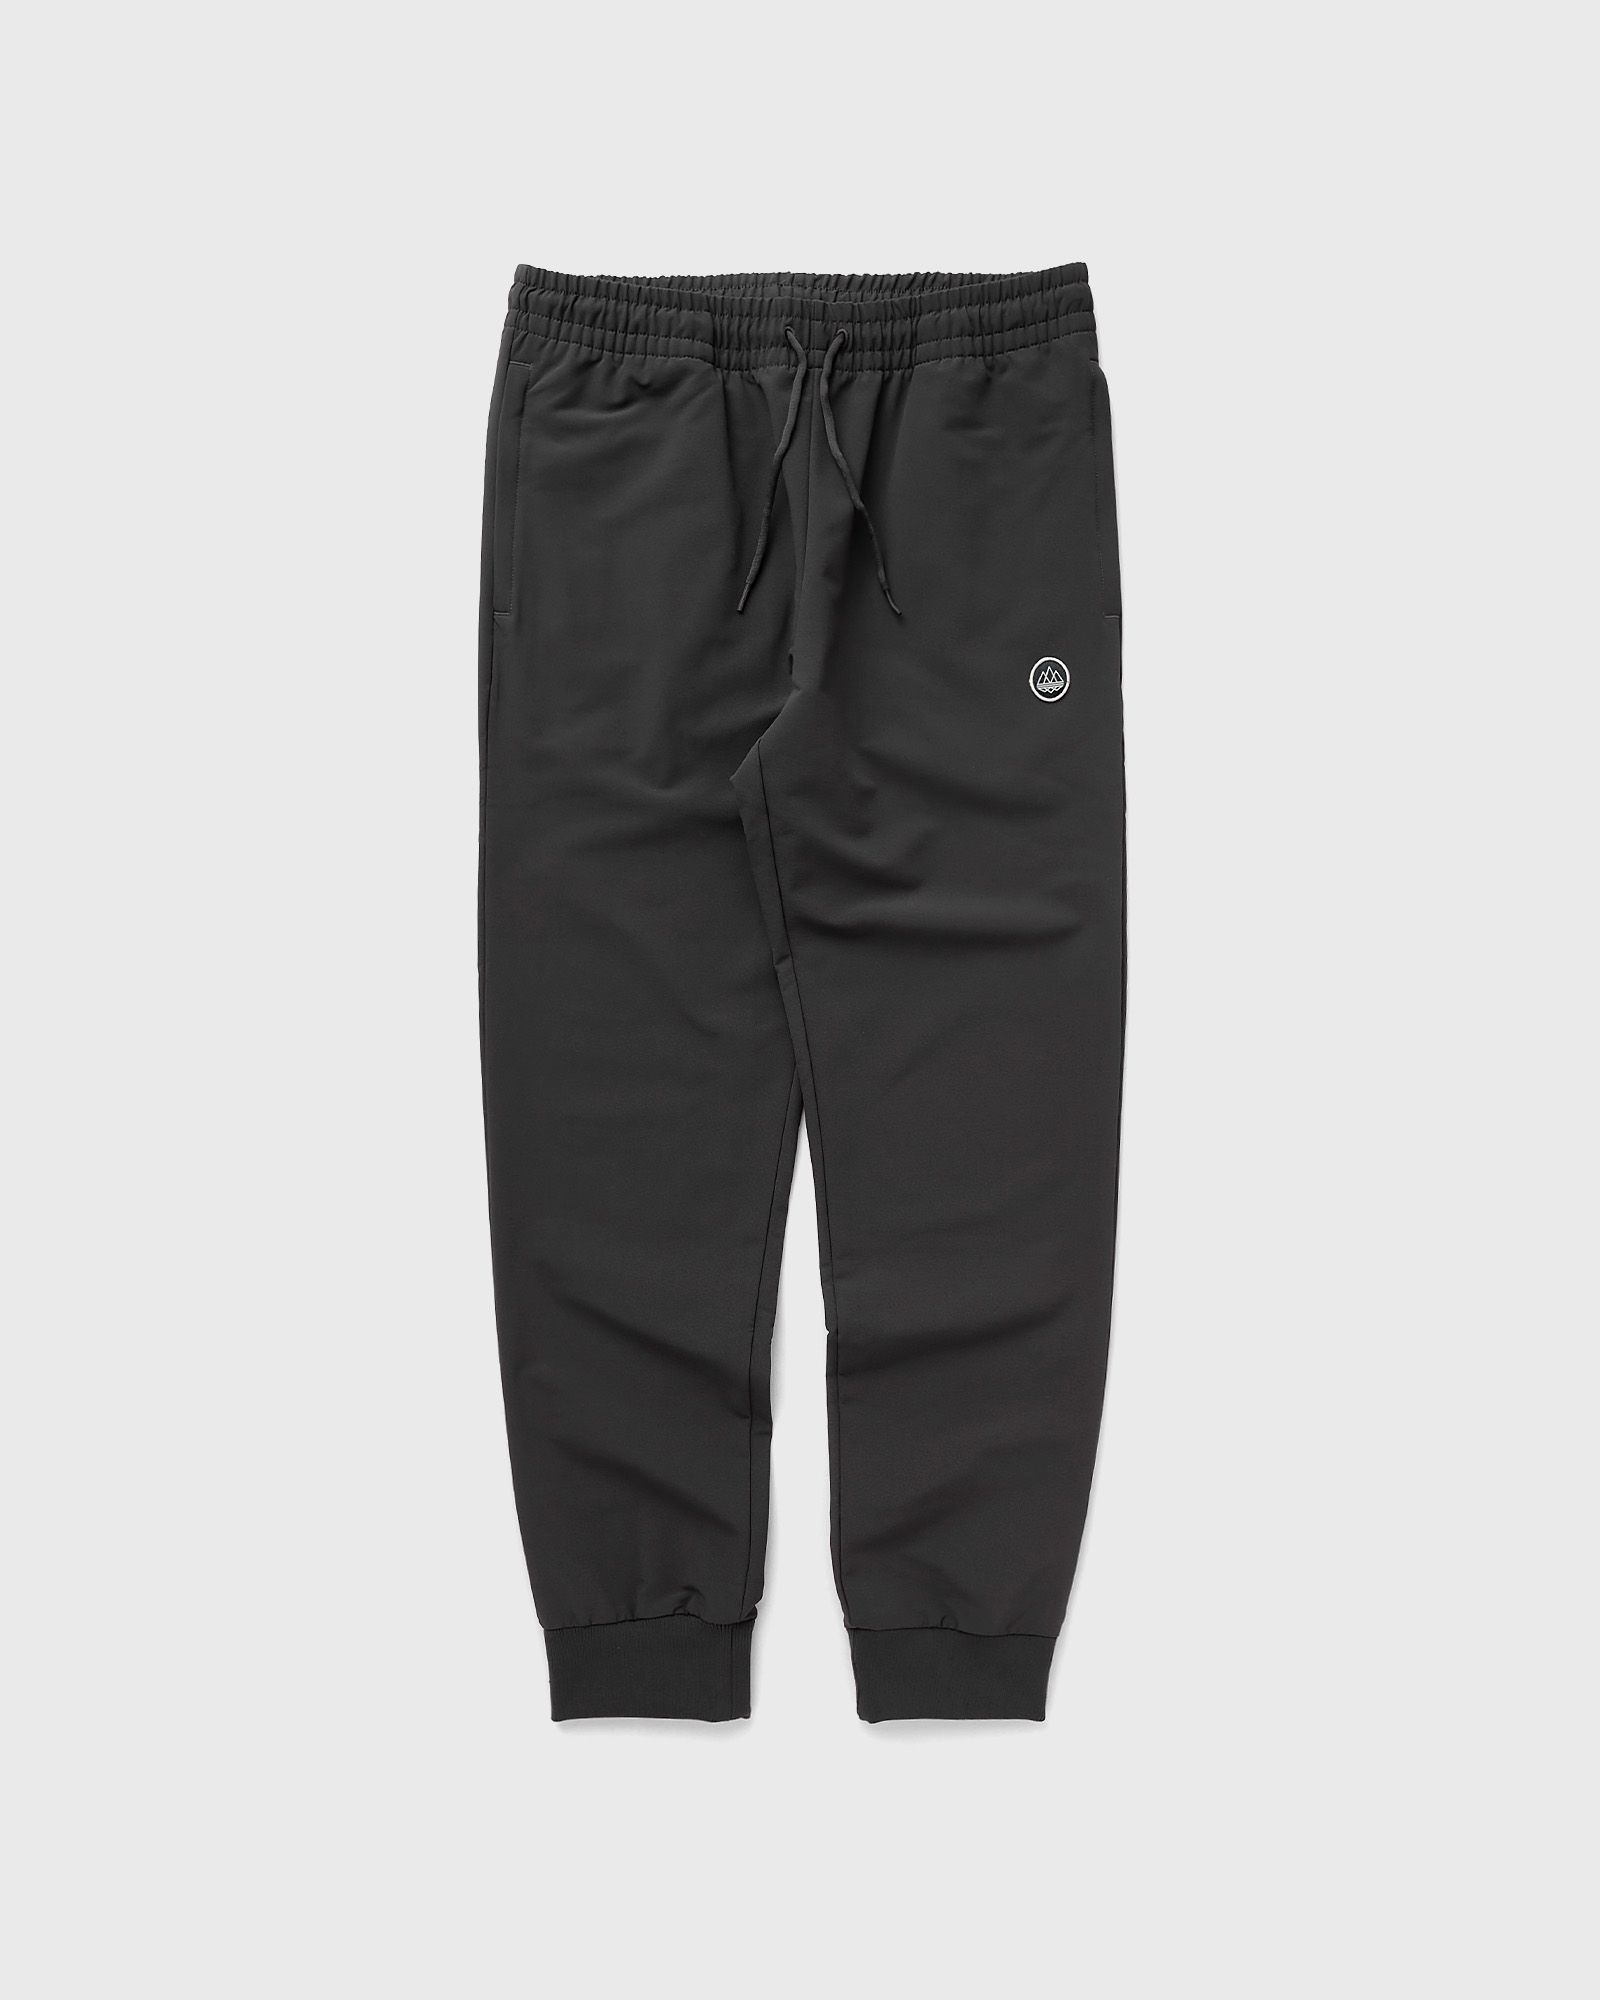 Adidas - suddell track pants spzl men track pants black in größe:xl